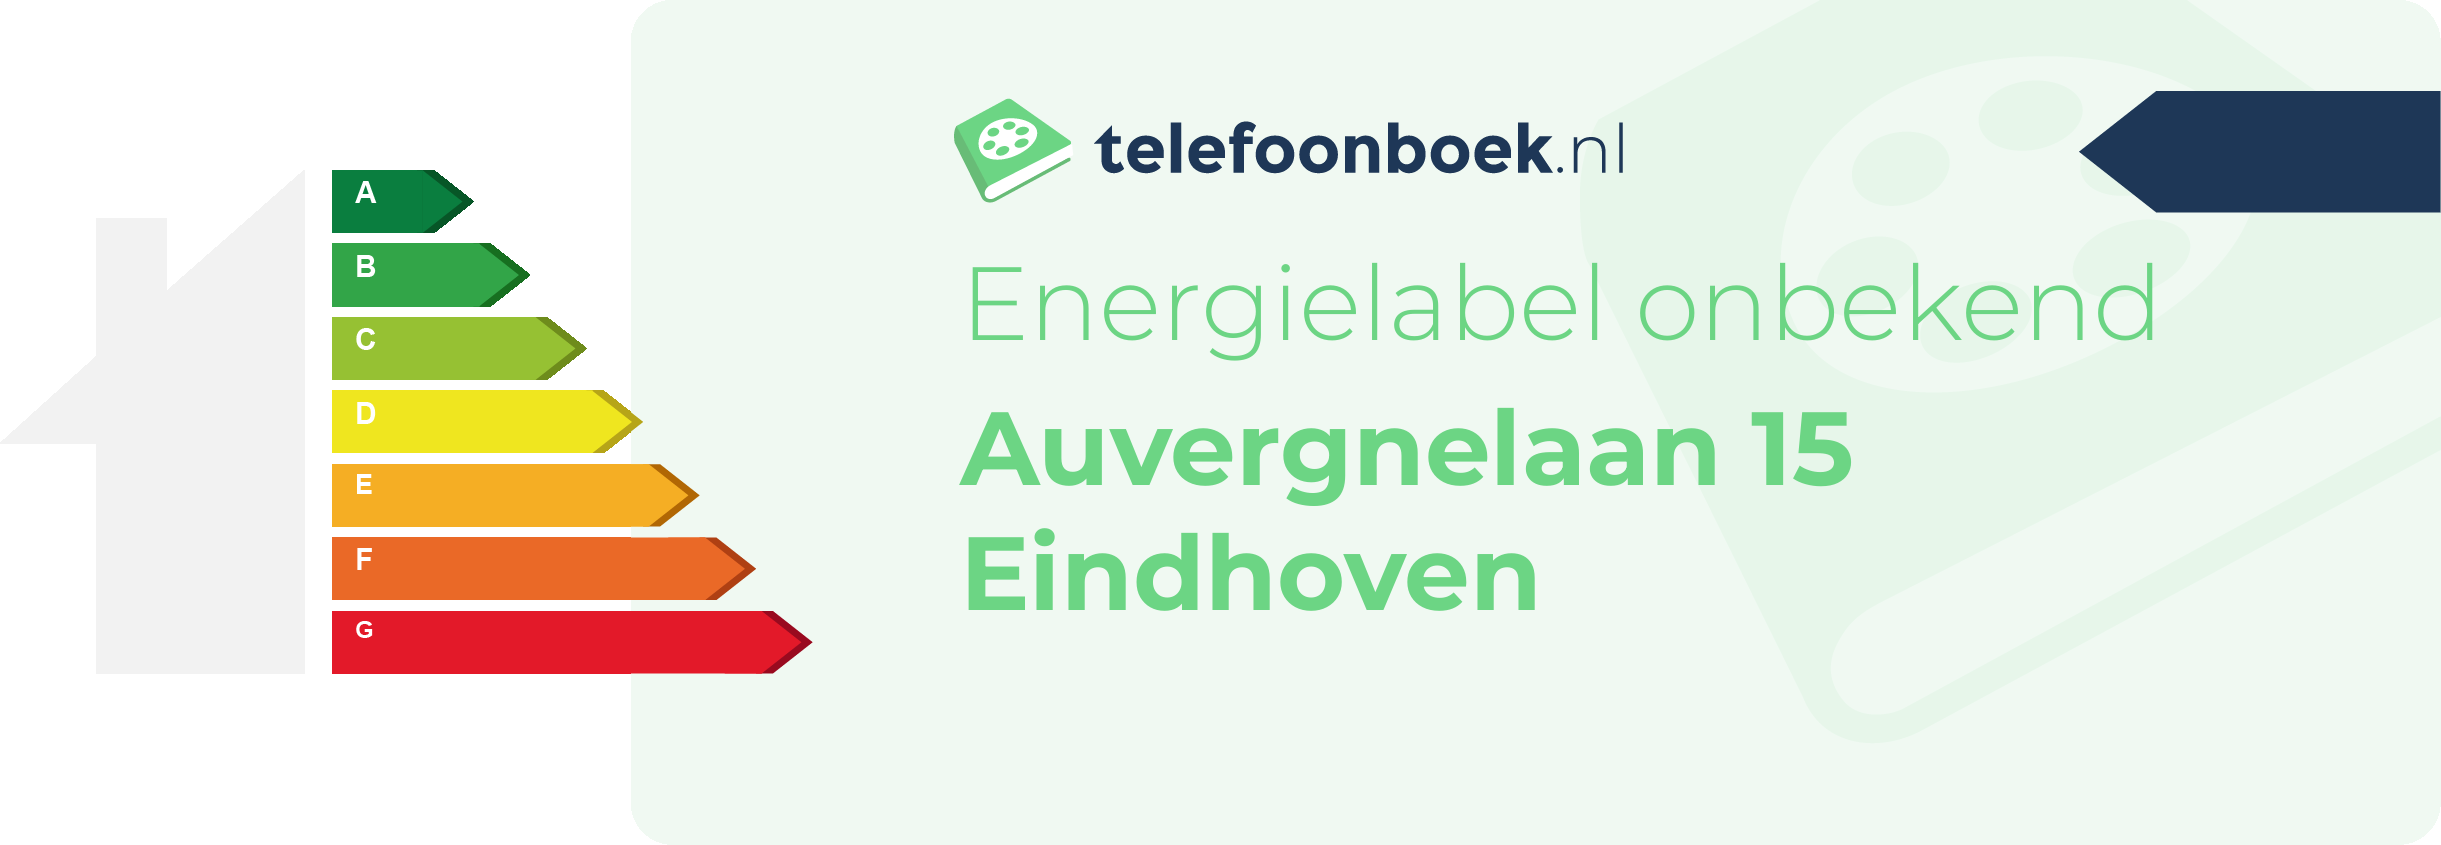 Energielabel Auvergnelaan 15 Eindhoven